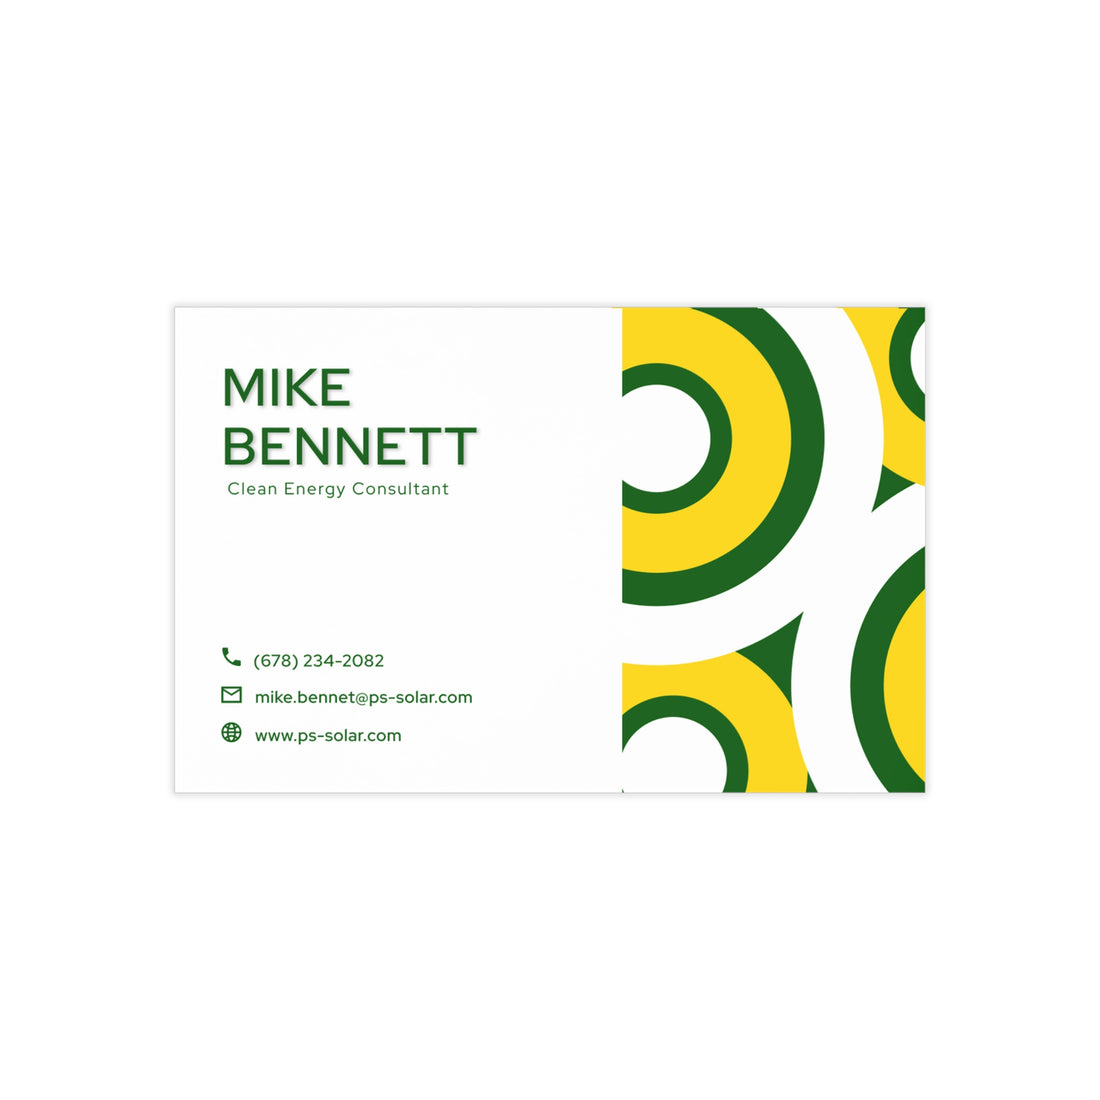 Mike Bennett Business Cards, 100pcs